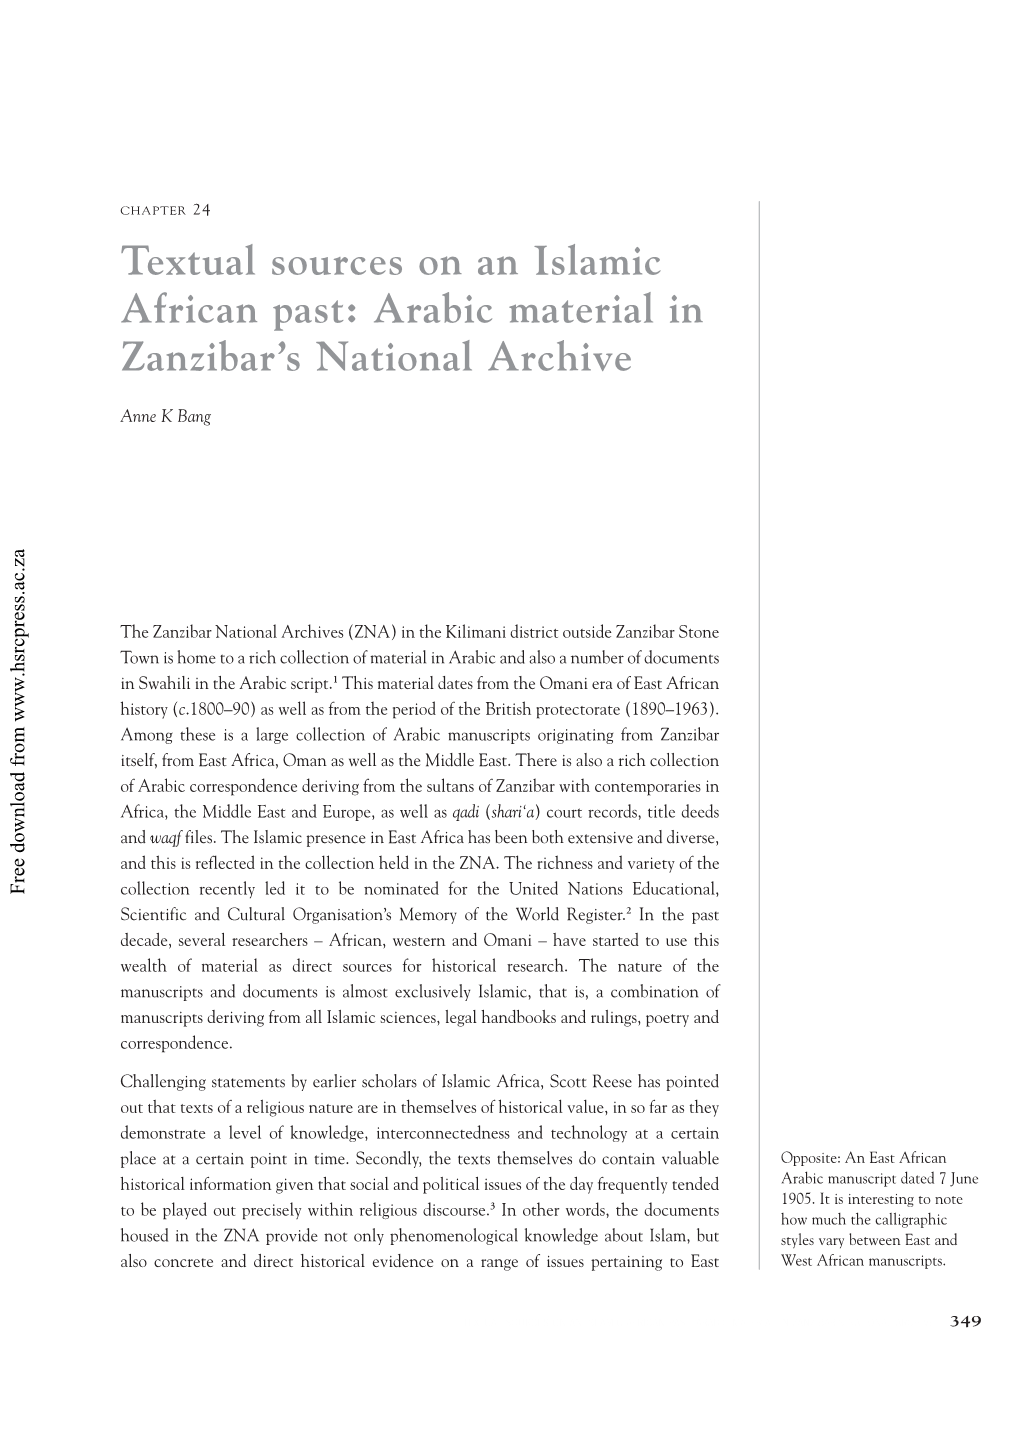 Arabic Material in Zanzibar's National Archive